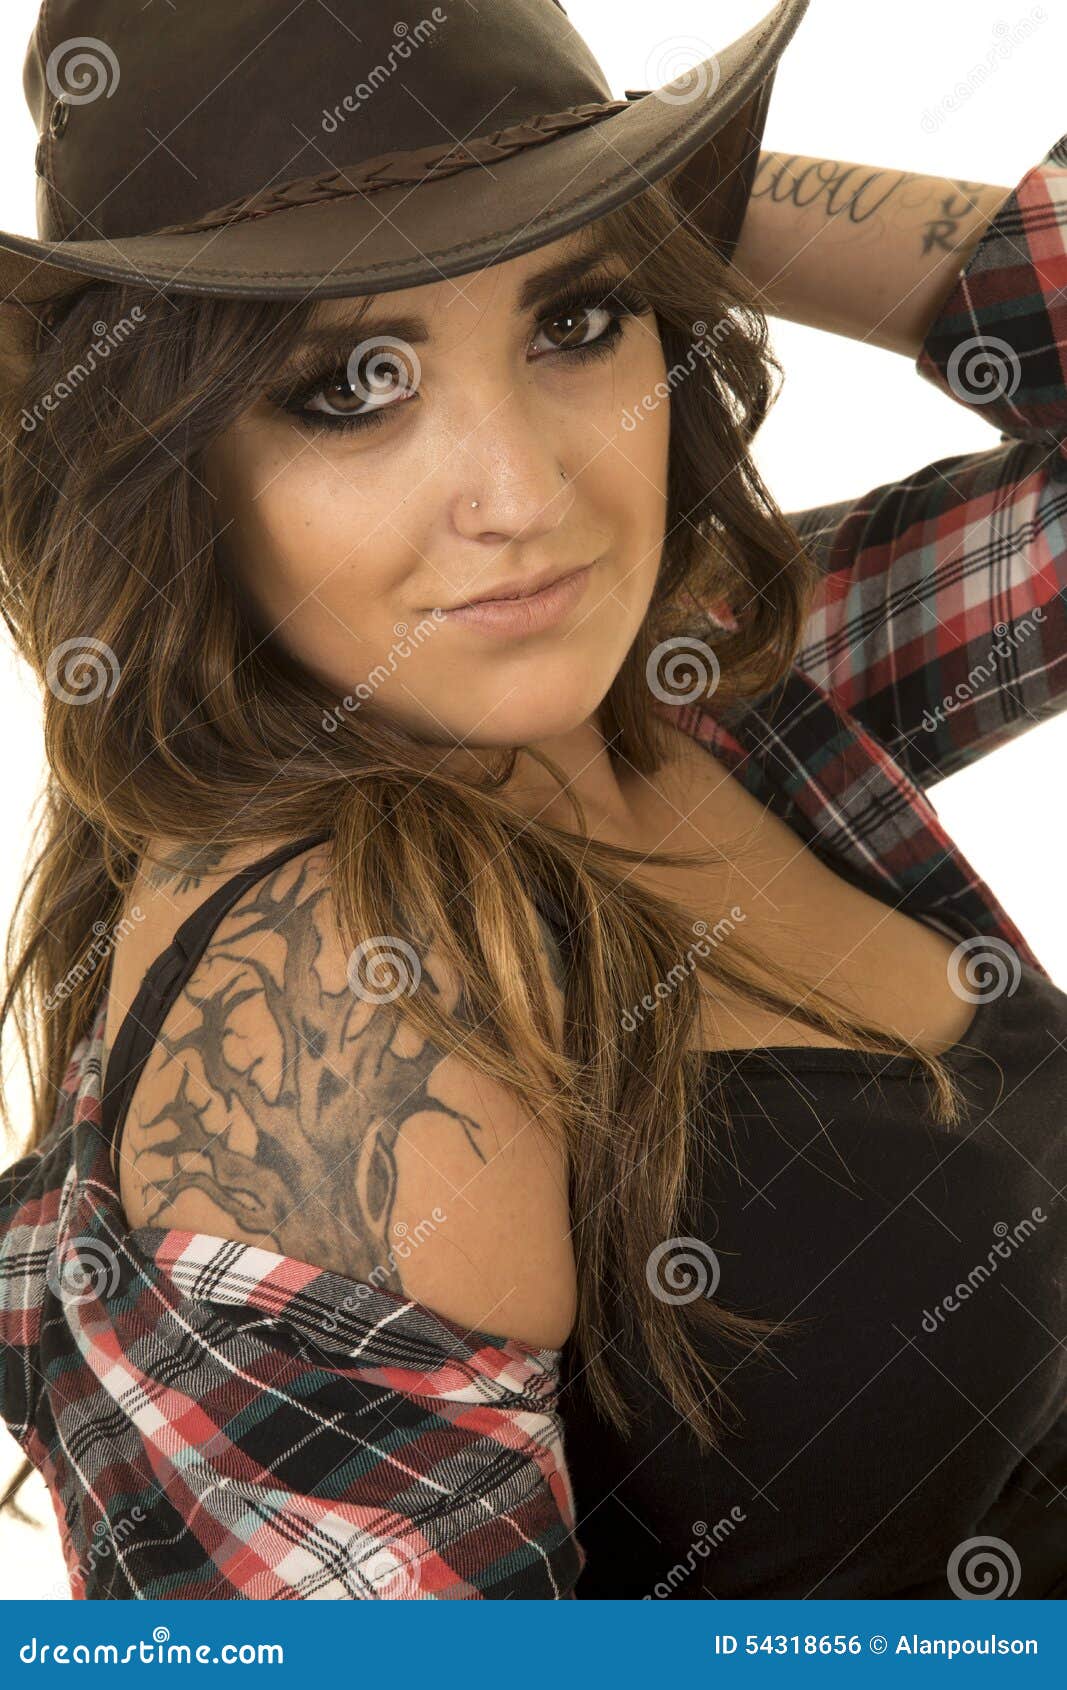 Southern Girl tattoo